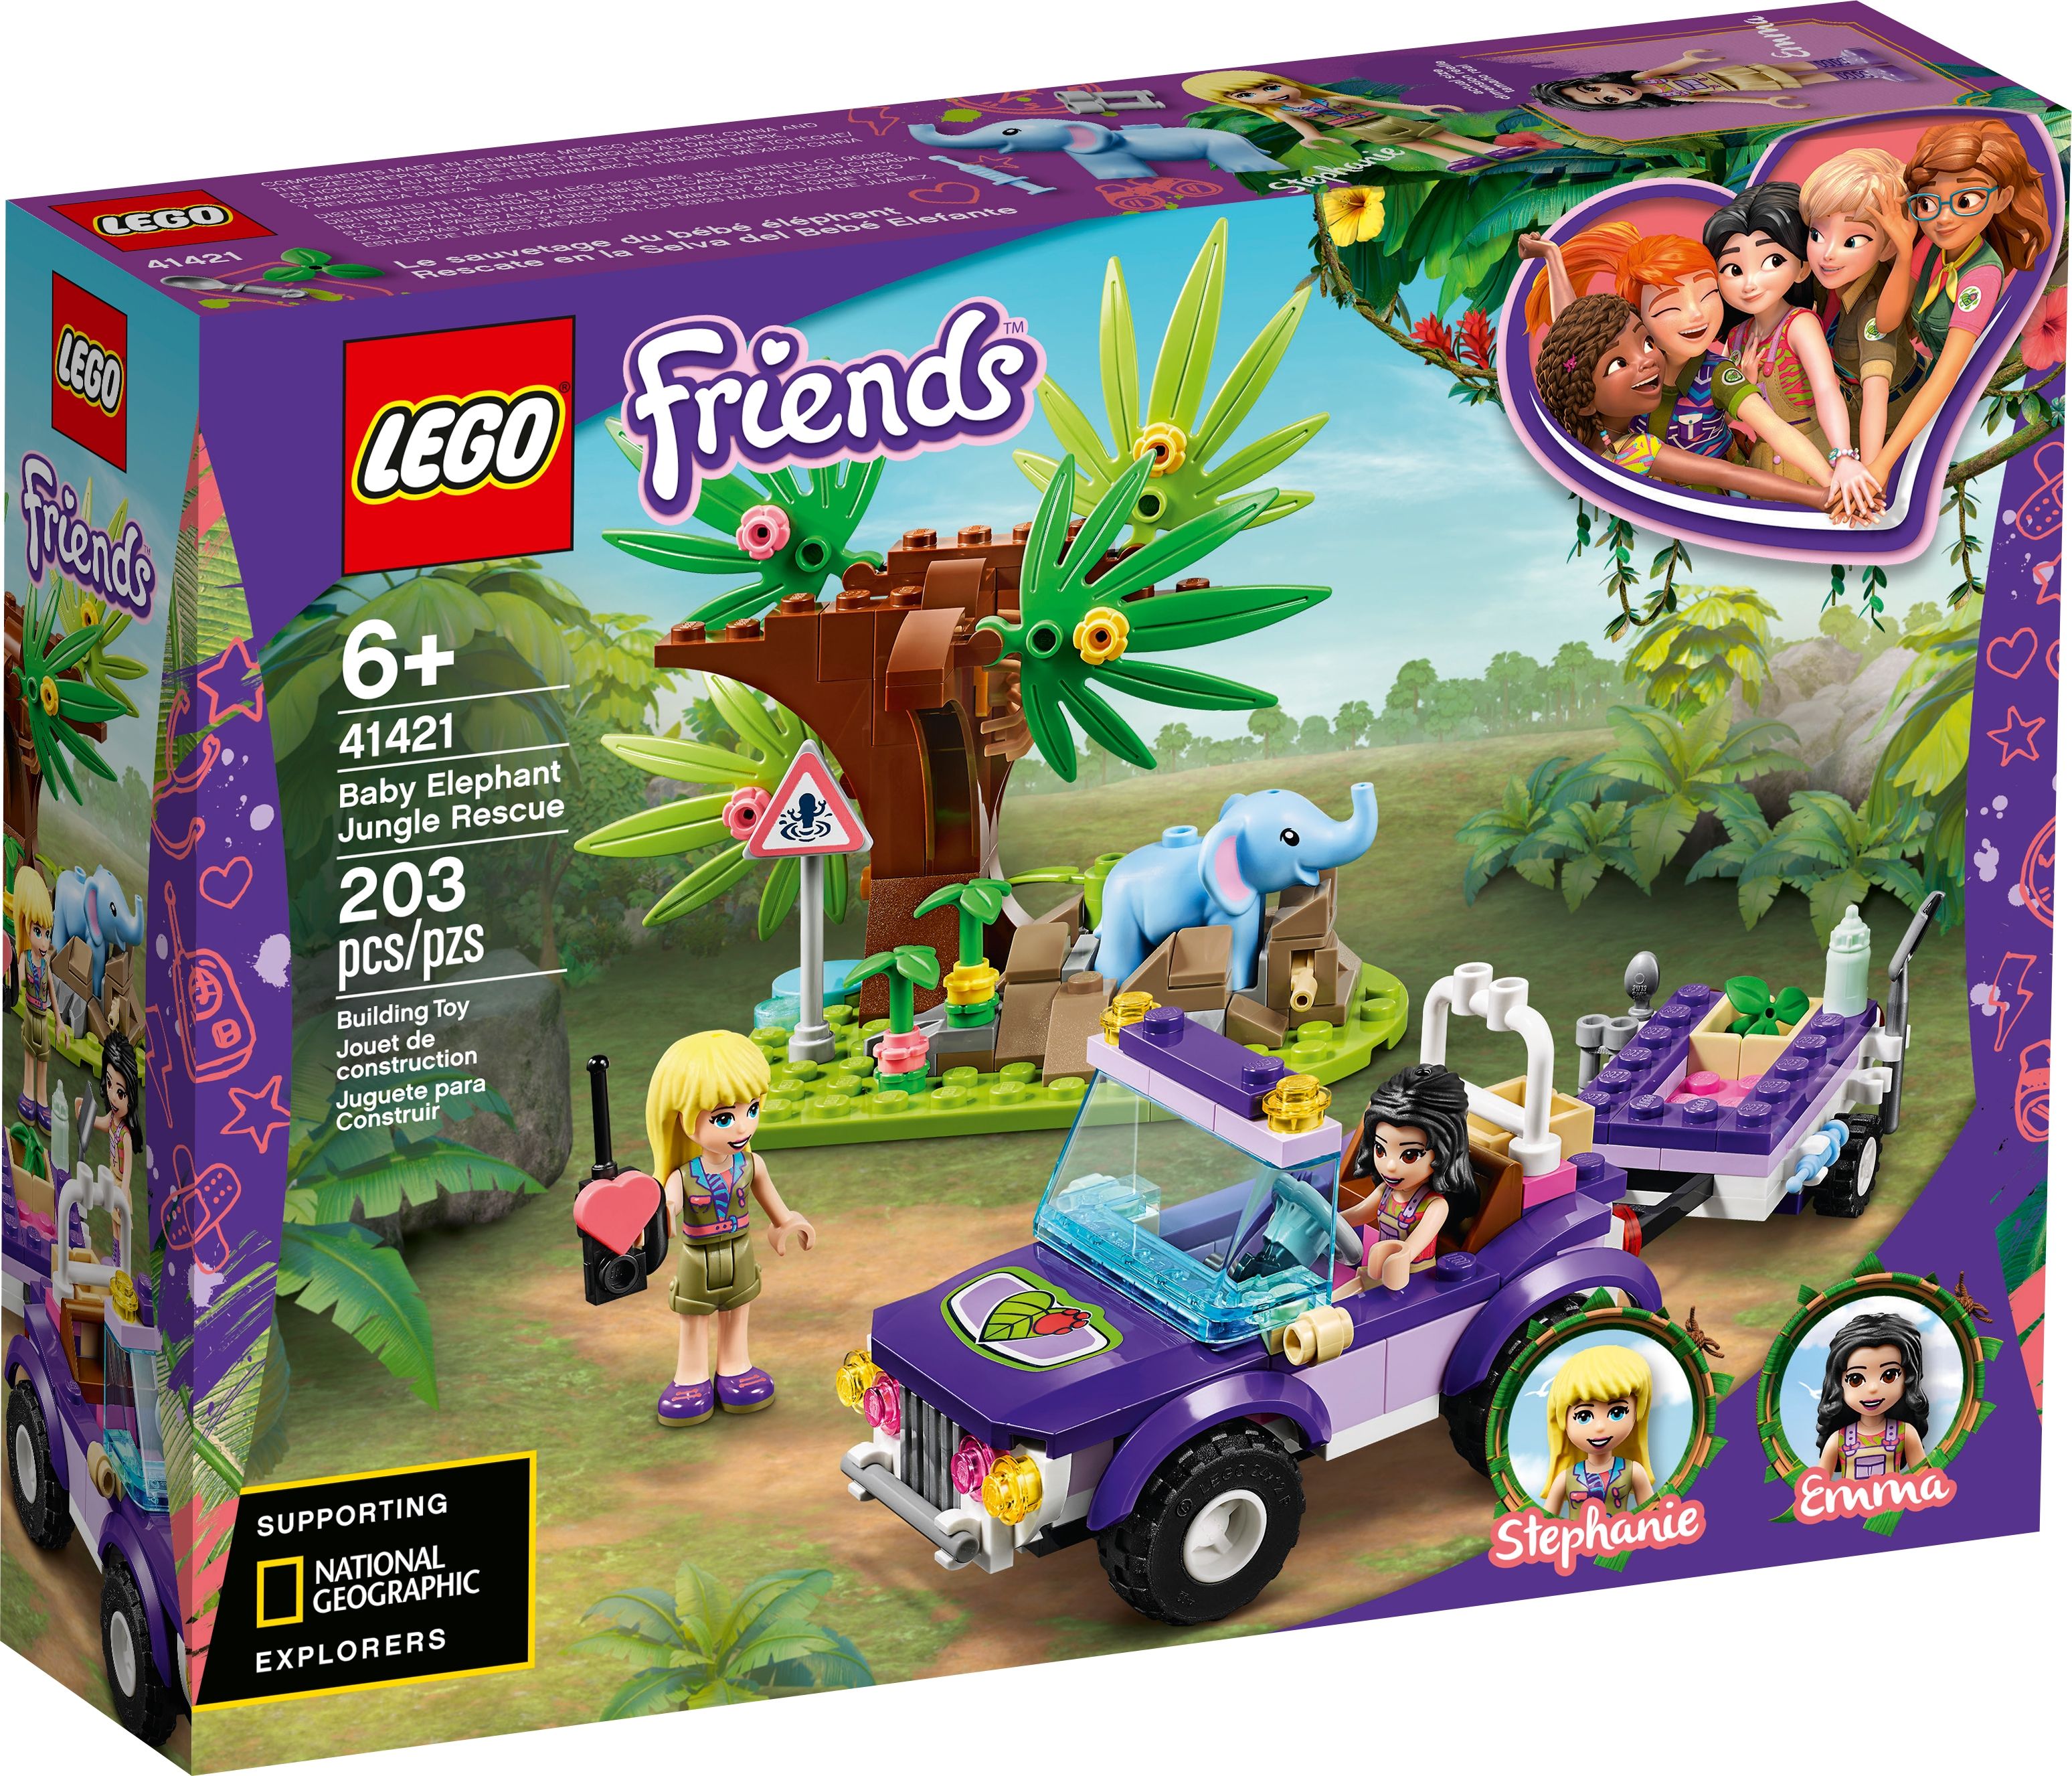 LEGO Friends 41421 Rettung des Elefantenbabys mit Transporter LEGO_41421_alt1.jpg